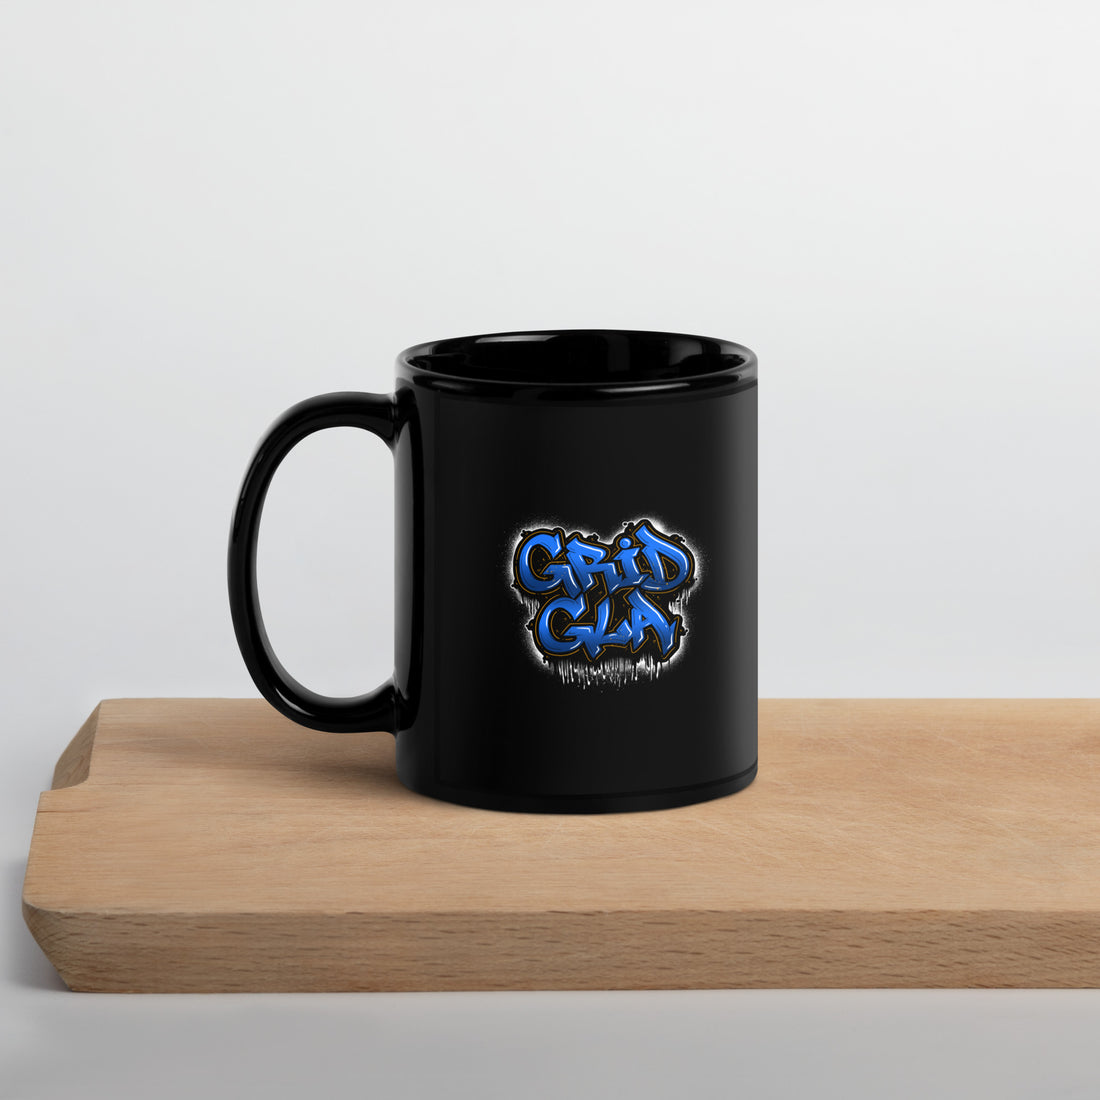 GRID GLA Tag - Black Glossy Mug